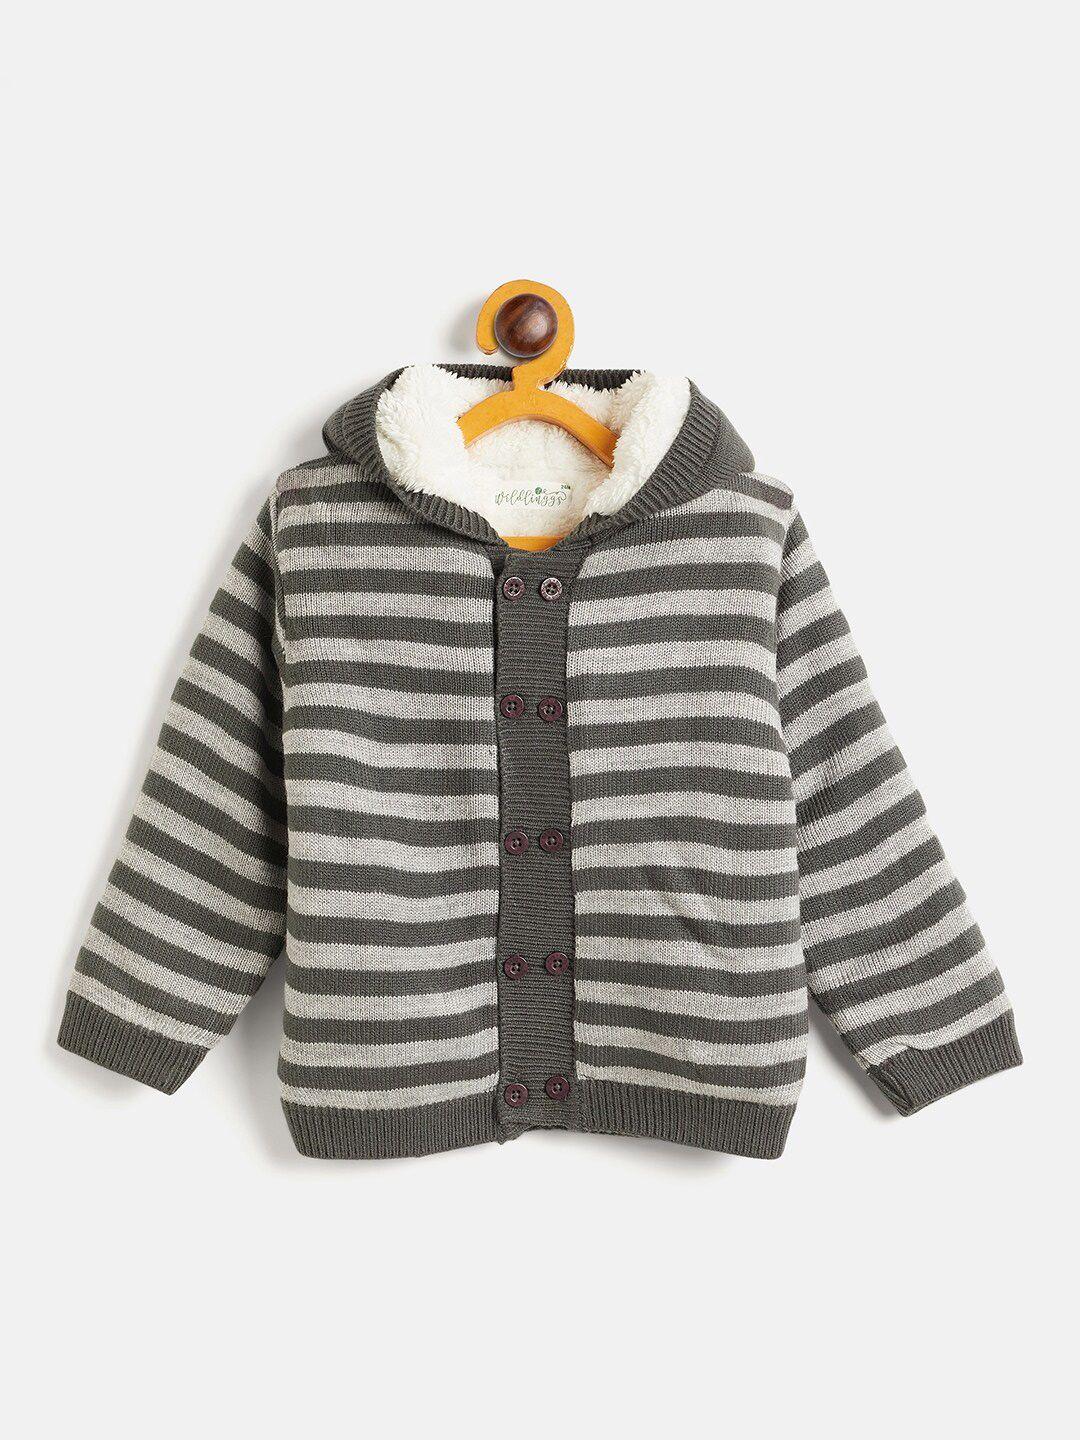 jwaaq kids striped hooded long sleeves cotton cardigan sweater